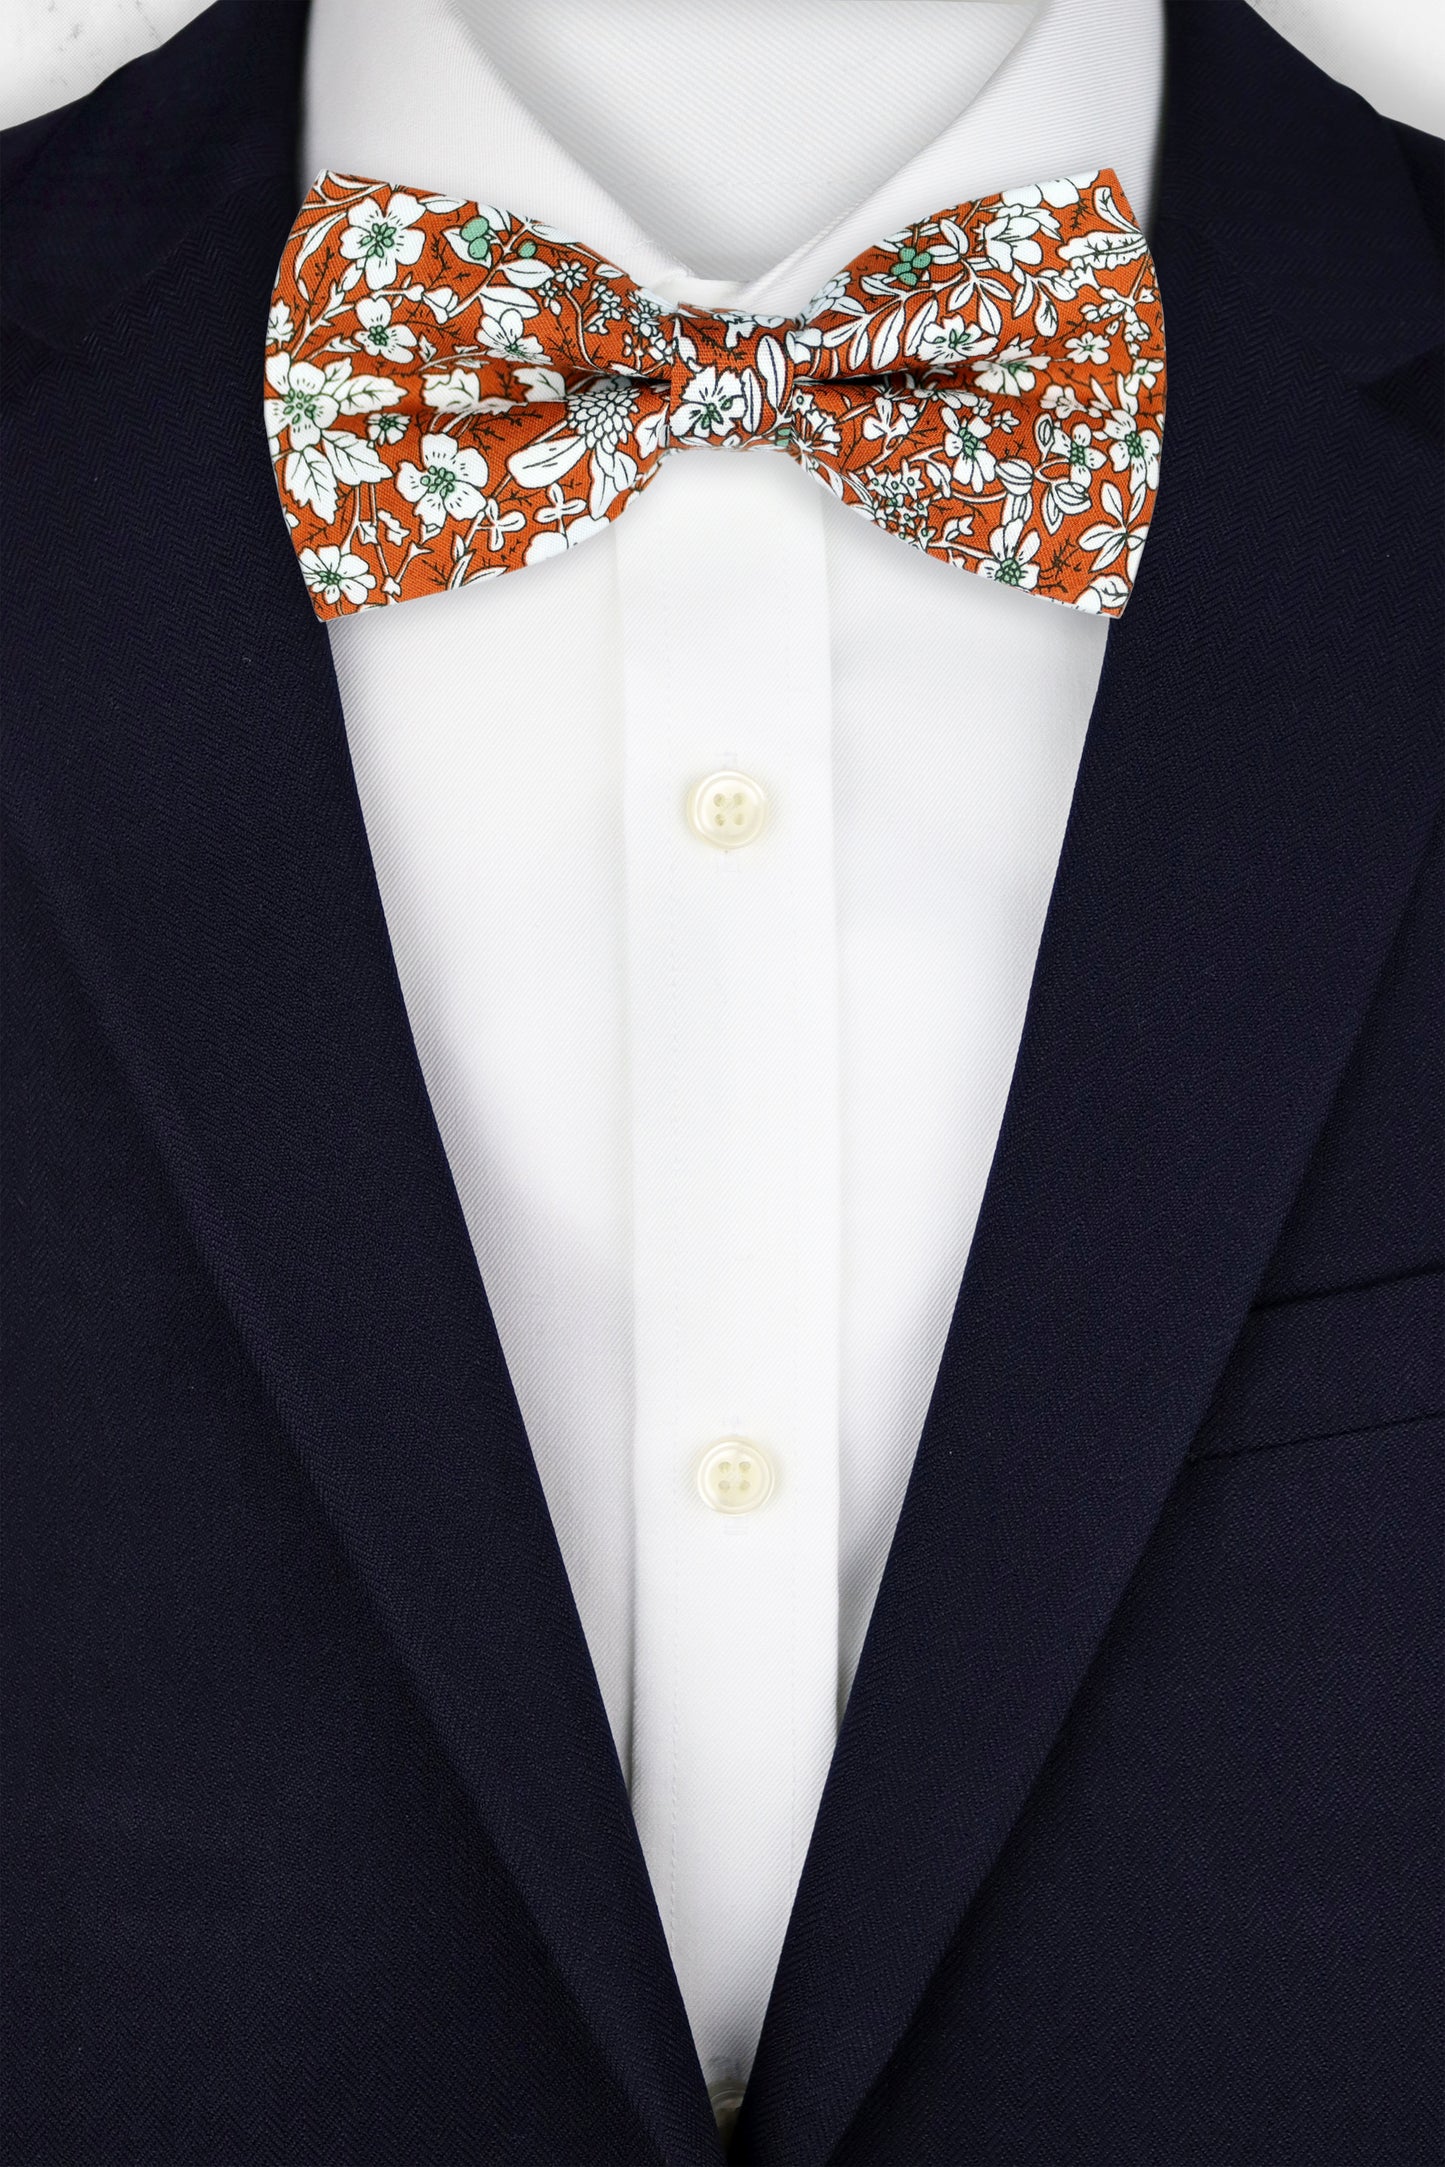 100% Cotton Floral Print Tie - Orange & White